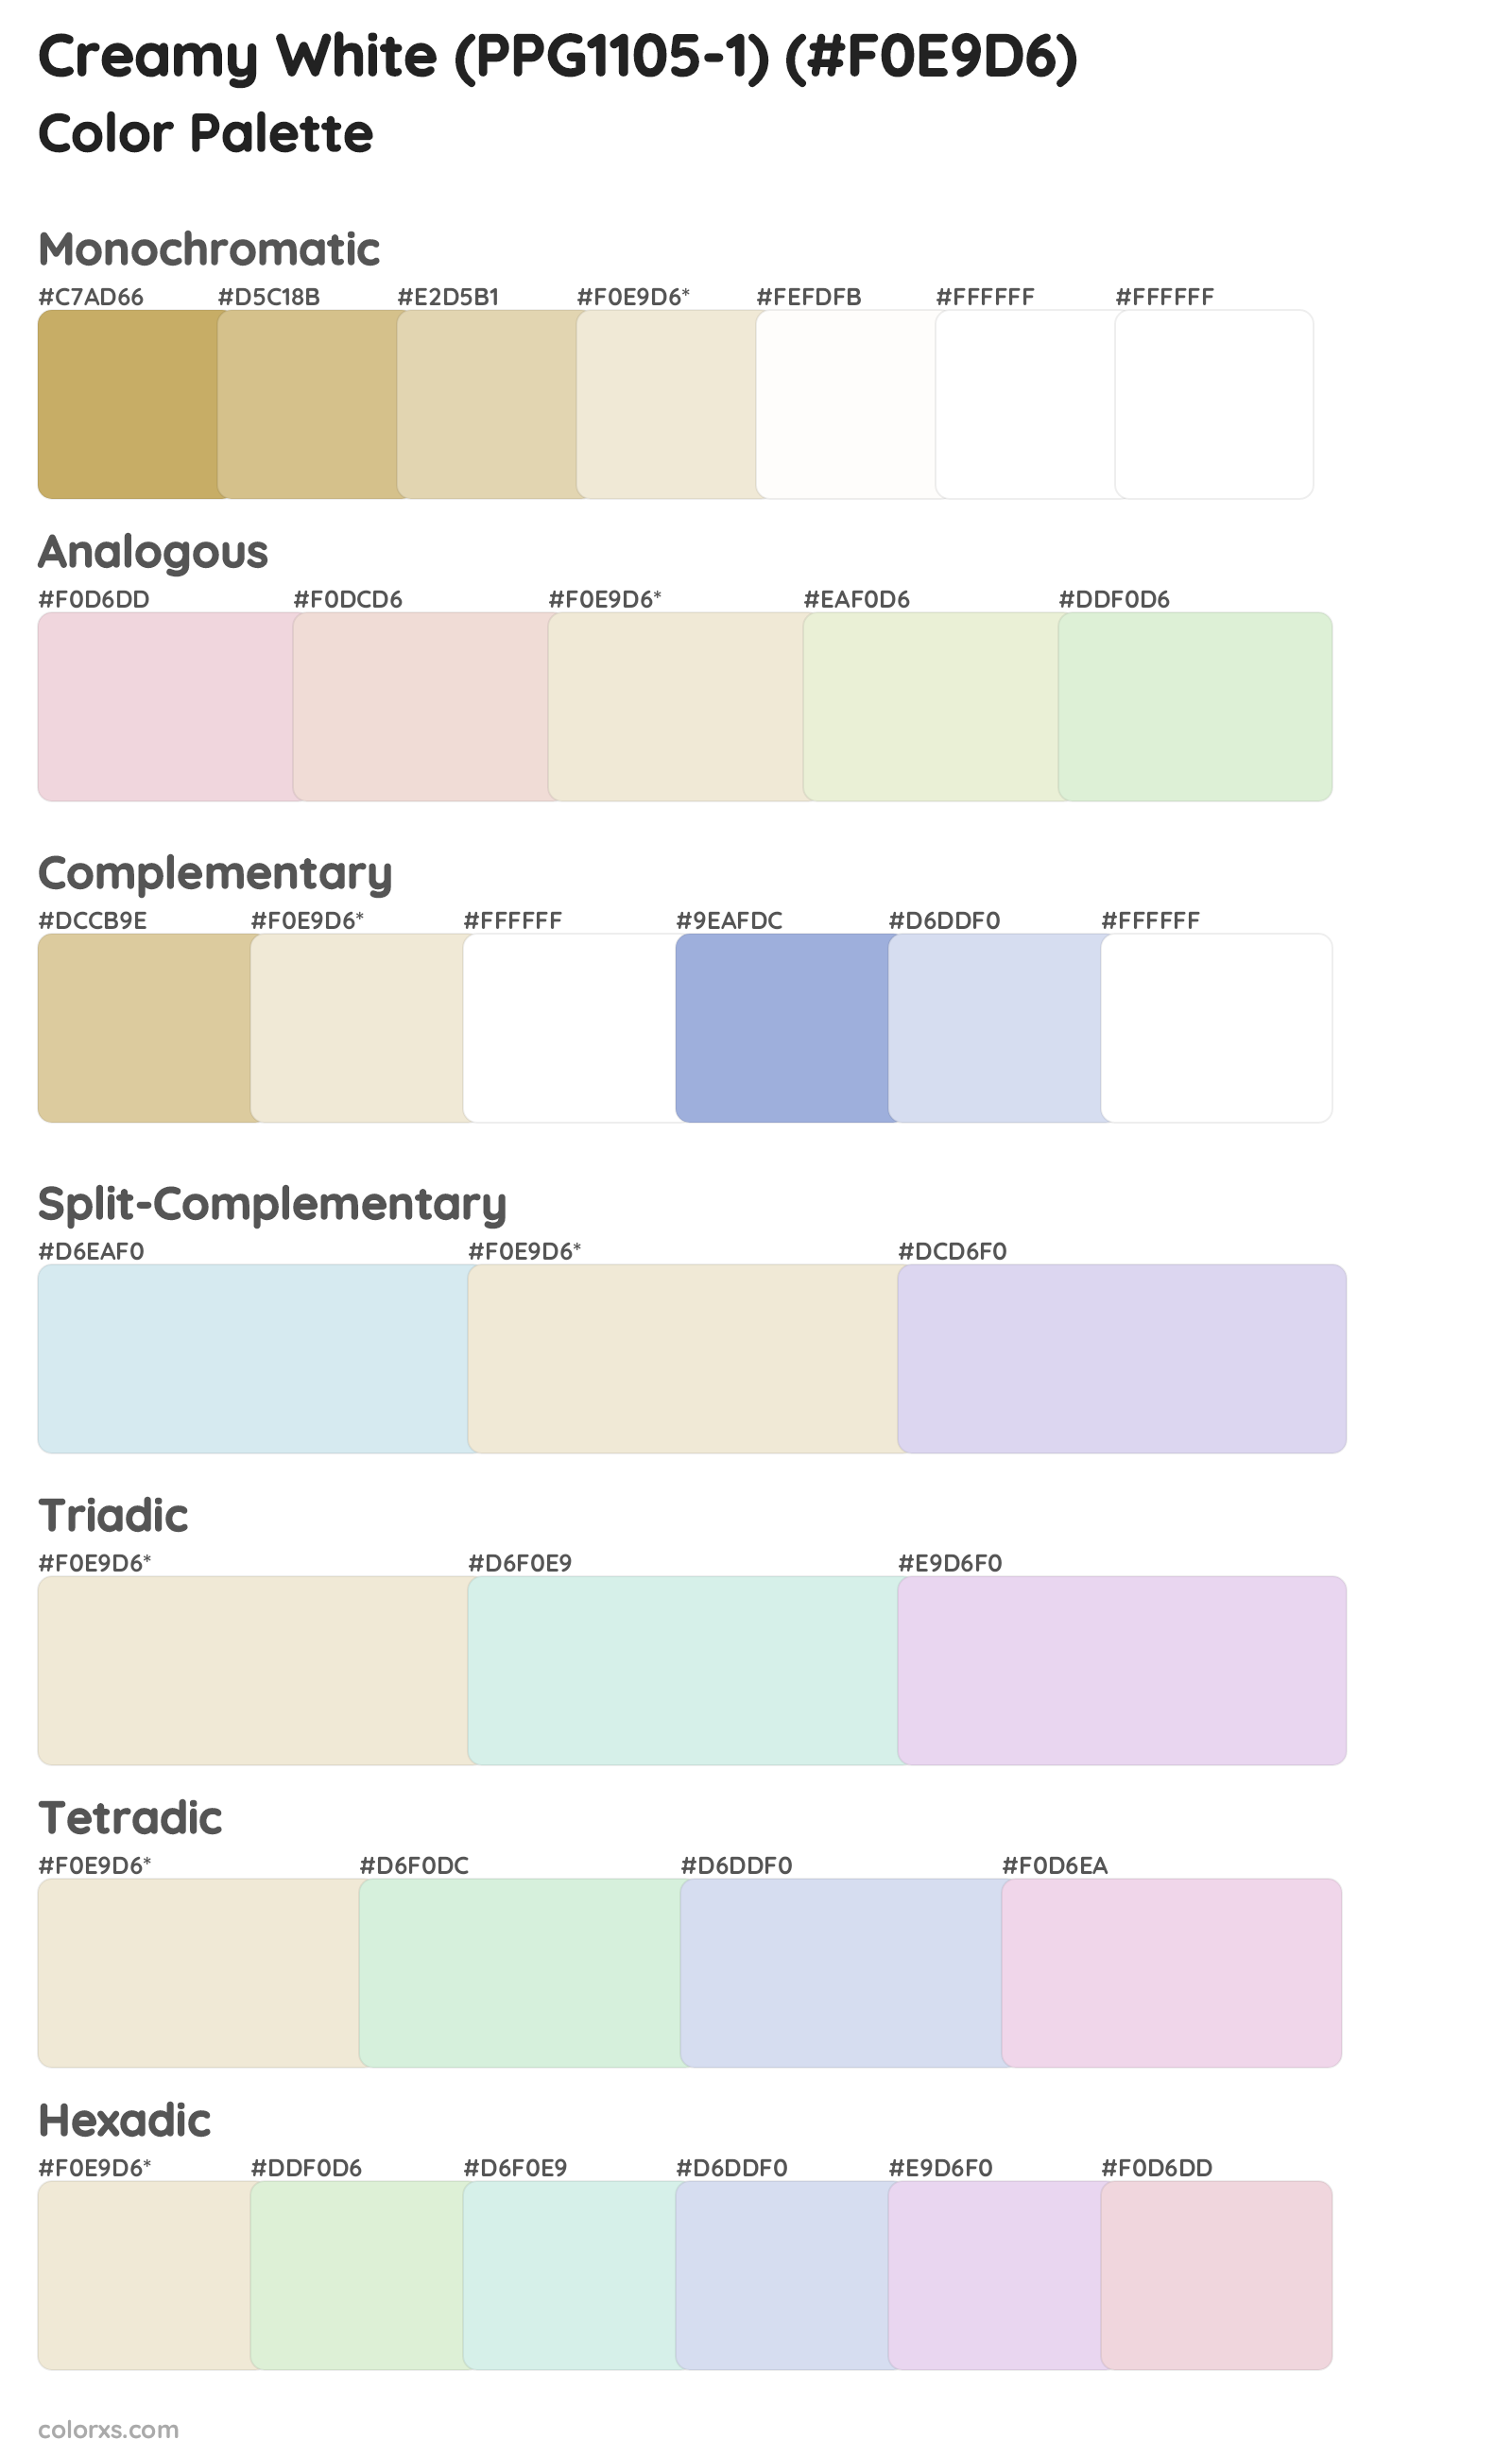 Creamy White (PPG1105-1) Color Scheme Palettes